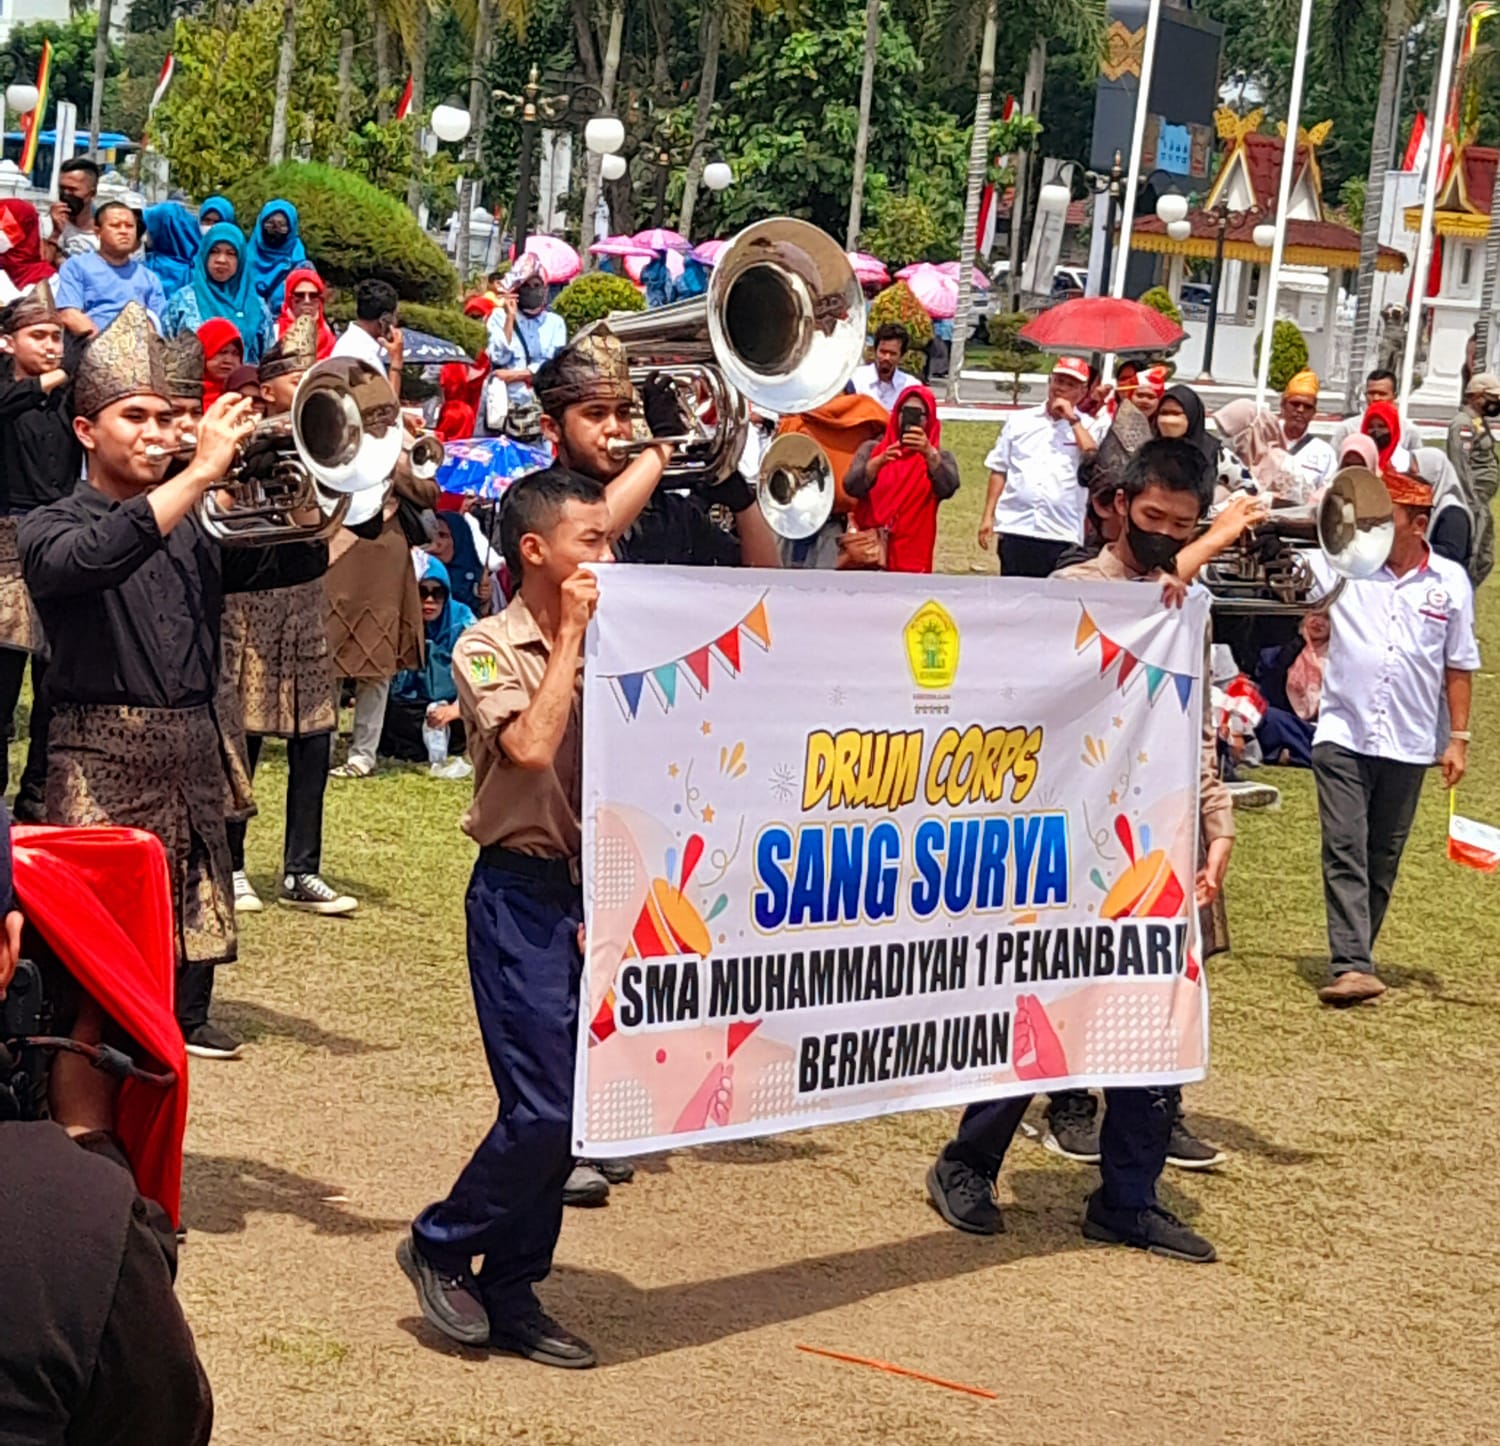 Dihadapan Gubri, Drumband Sang Surya SMA Muhammadiyah 1 Pekanbaru Berkemajuan Tampil Memukau di Pawai Budaya 2022